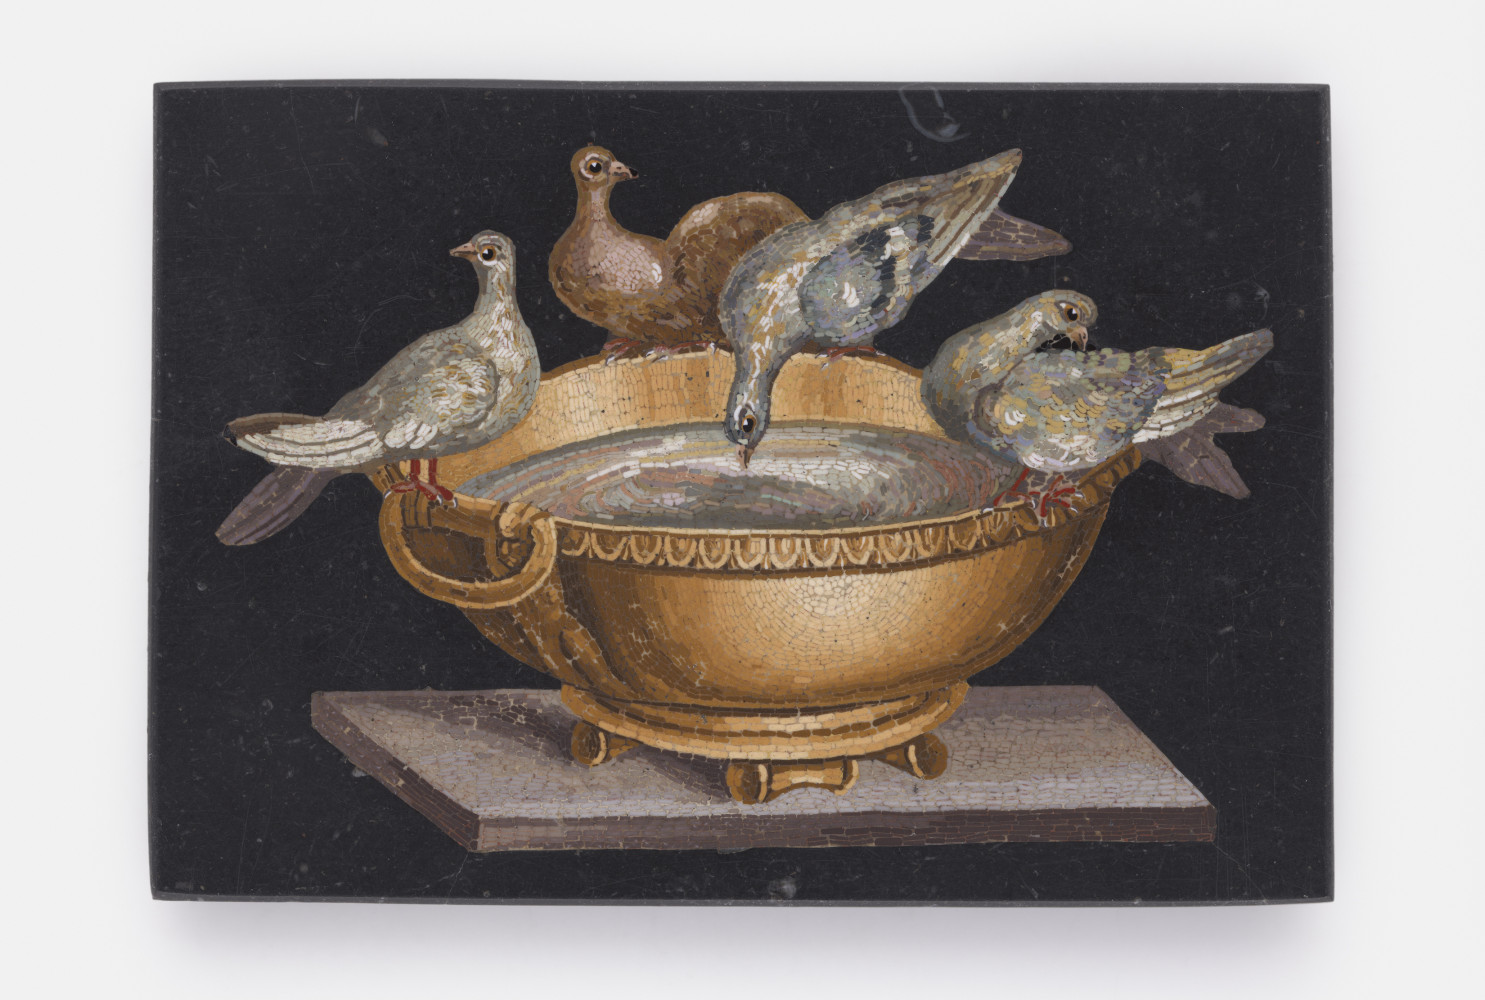 Doves of Pliny, 19th century, Giaocchino Barberi (Italian, 1783-1857); Micromosaic set in black plaque; 54 x 78 mm; Collection of Elizabeth Locke; Photo: Travis Fullerton, Virginia Museum of Fine Arts 